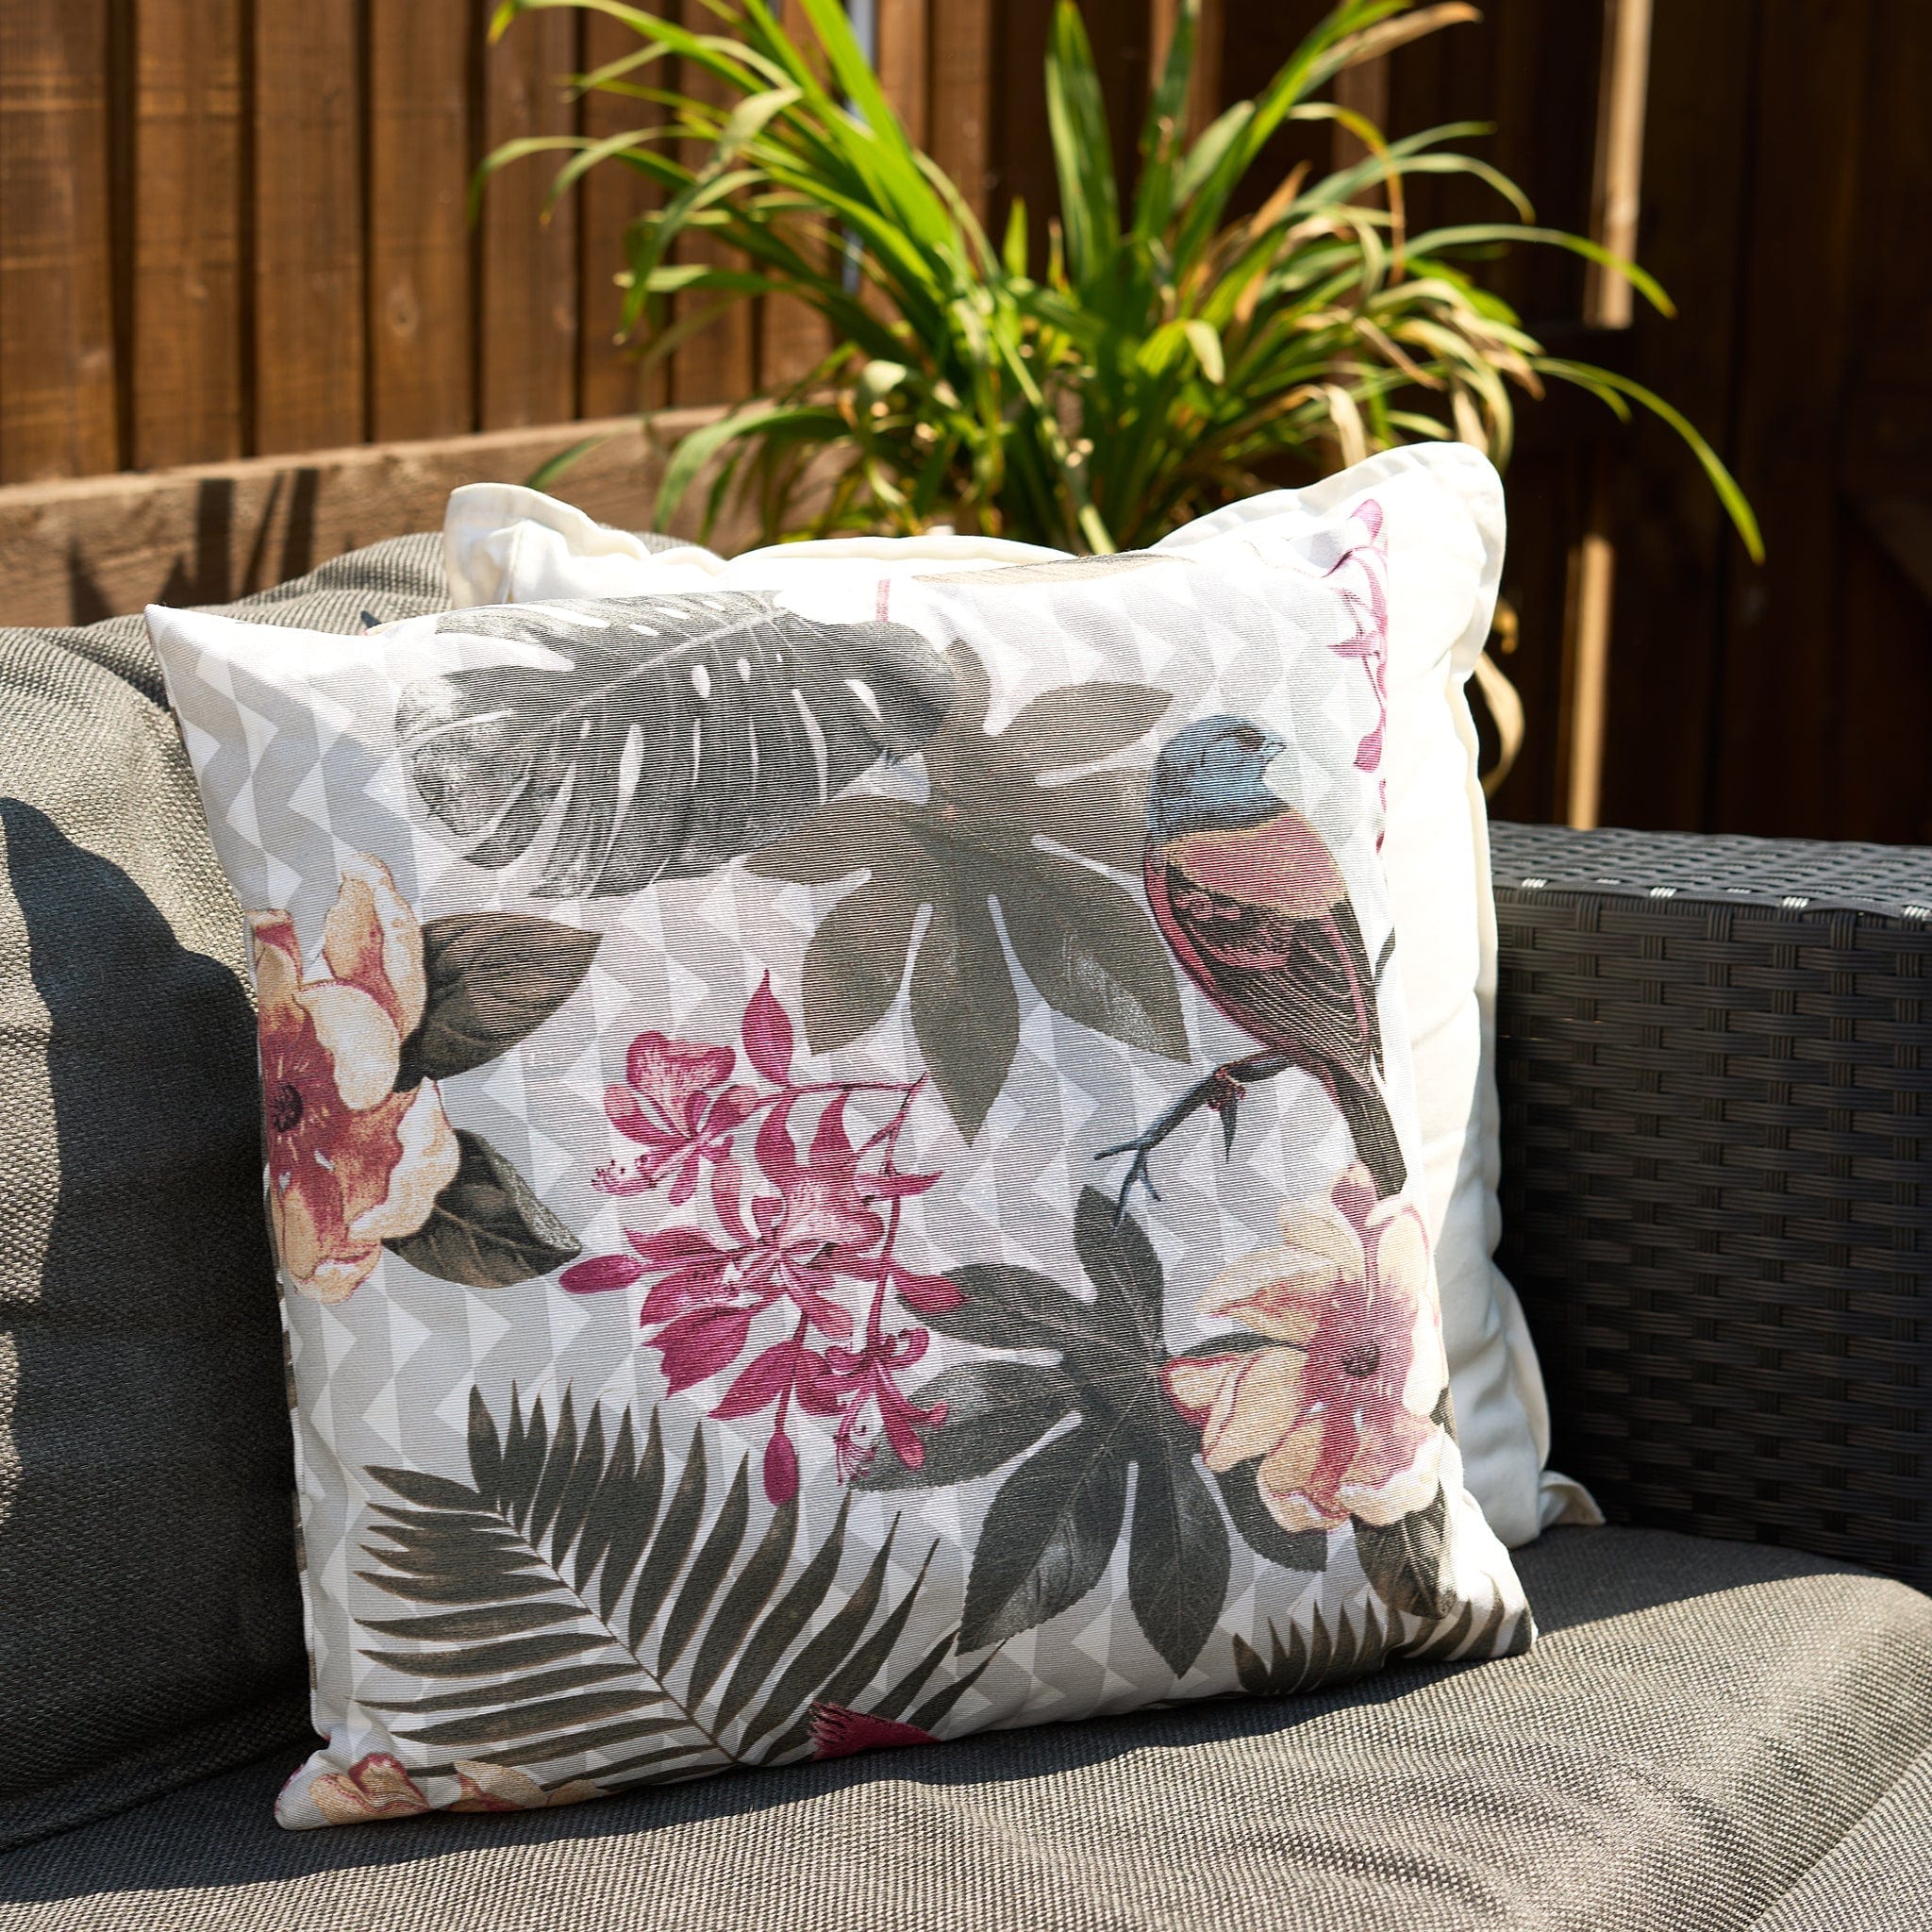 Pink Tropical Birds Outdoor Garden Cushion - 42 x 42cm-8713229053635-only5pounds.com